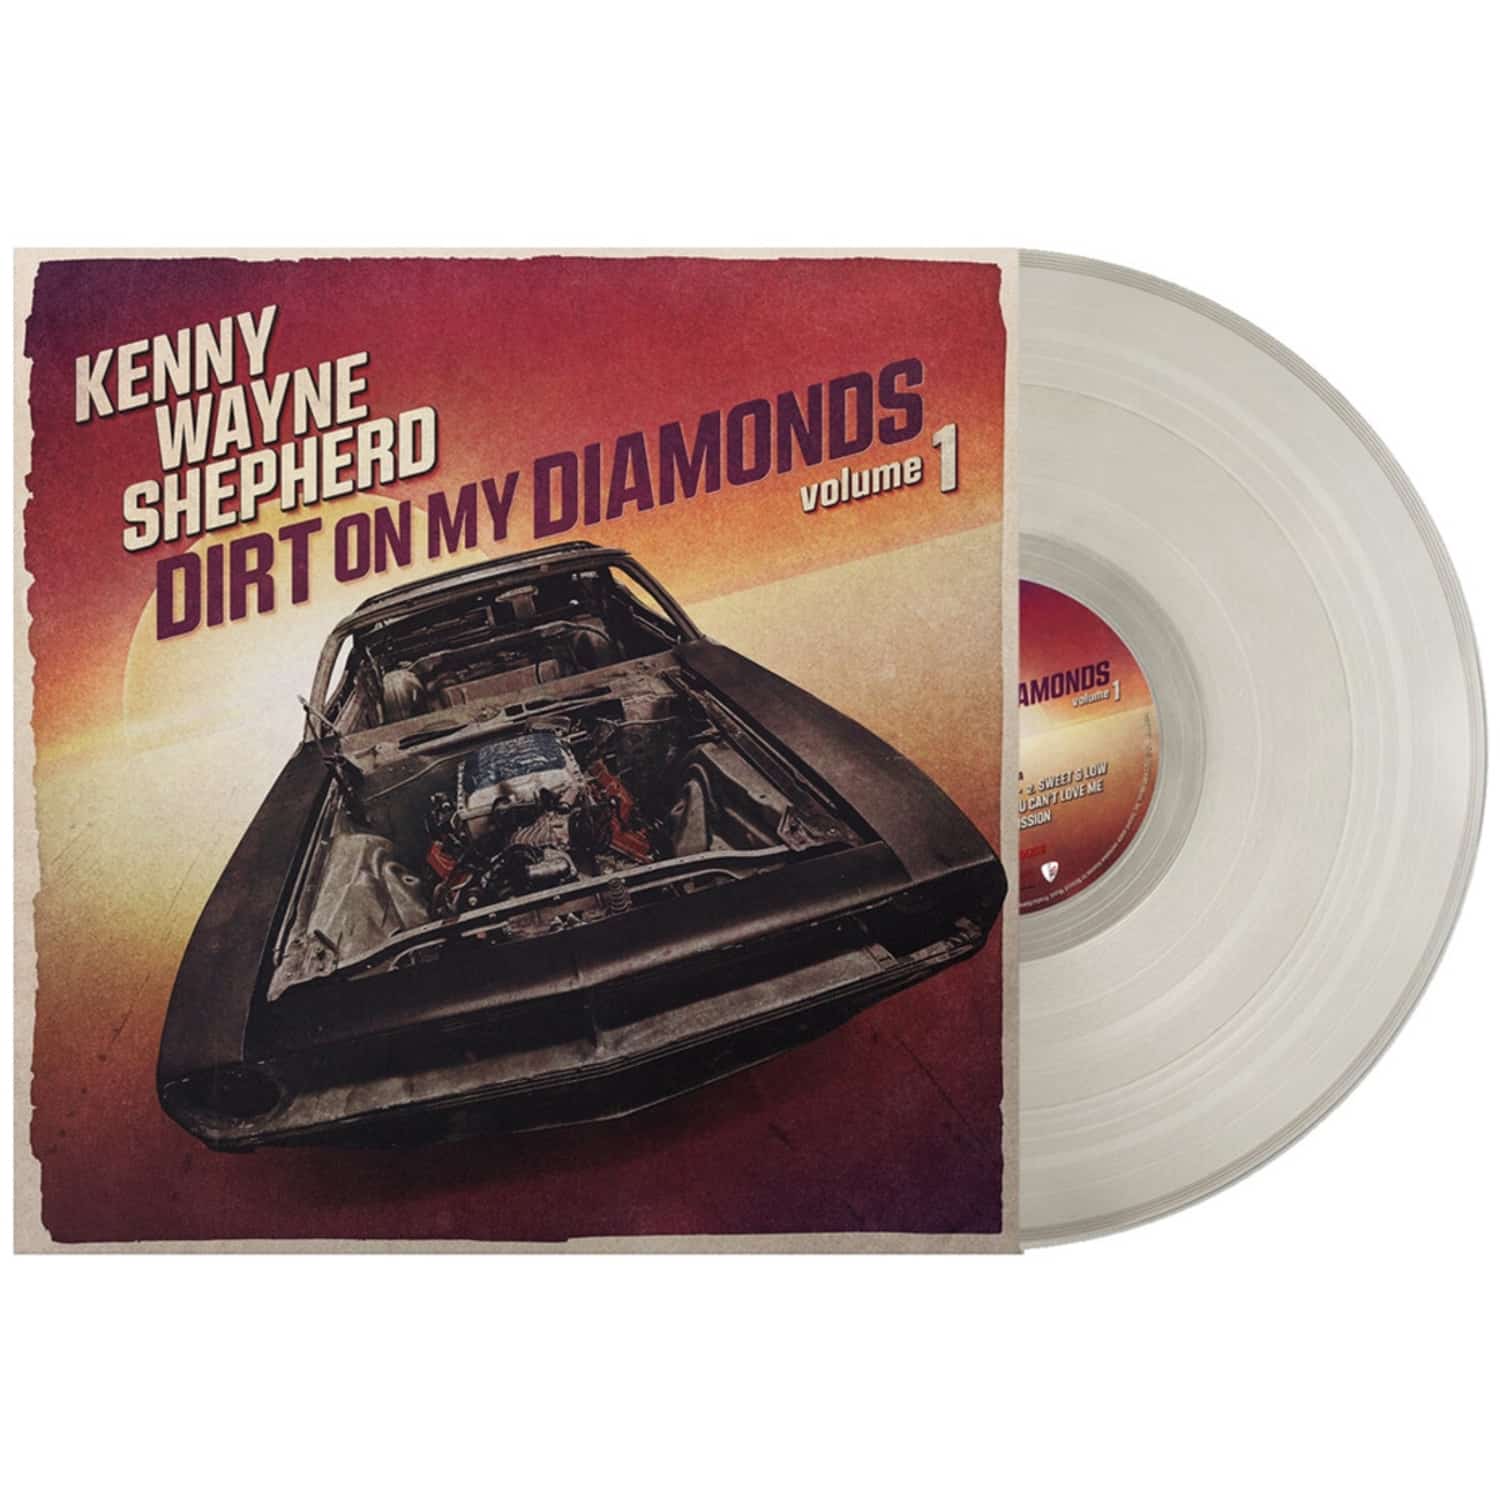 Kenny Wayne Shepherd - DIRT ON MY DIAMONDS VOL. 1 